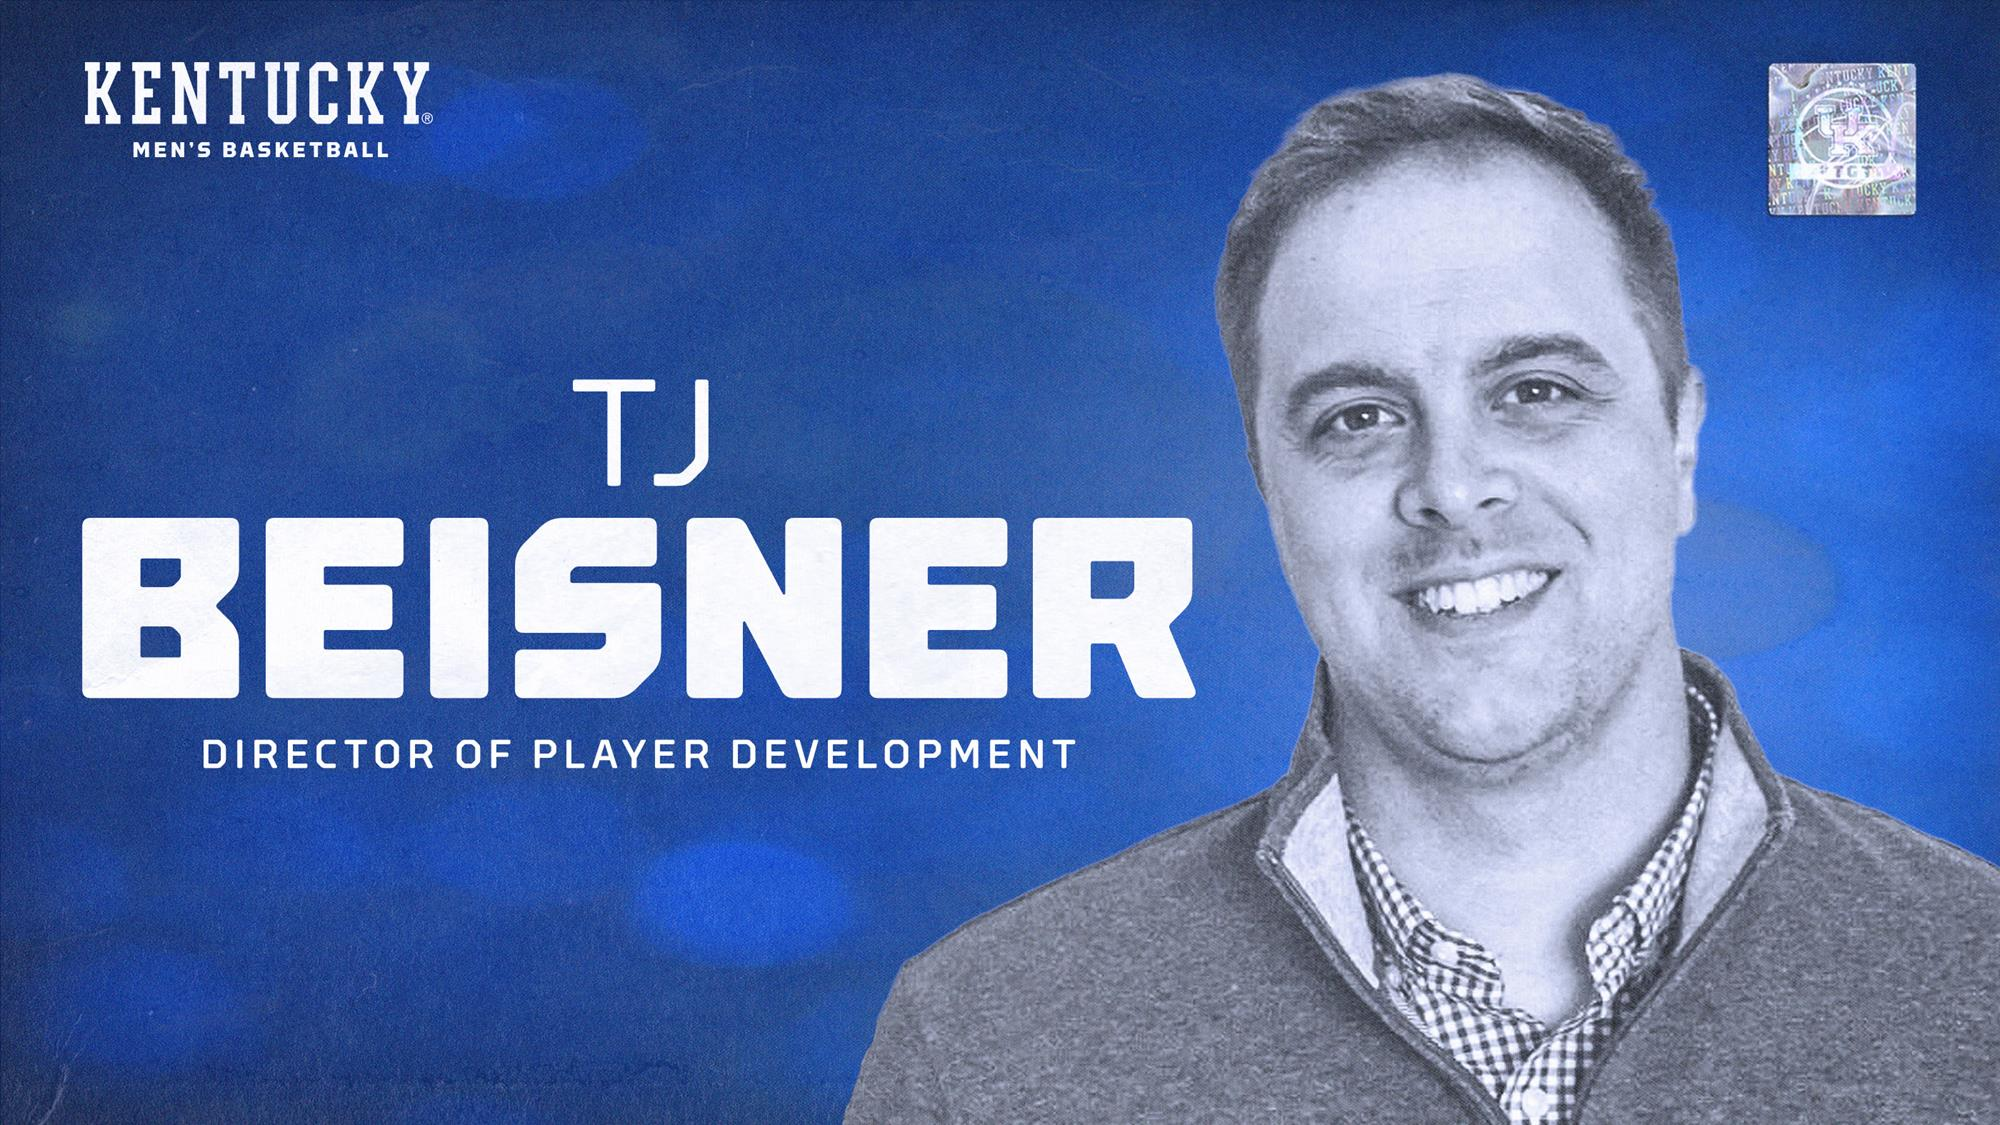 TJ Beisner Tabbed UK MBB Director of Player Development